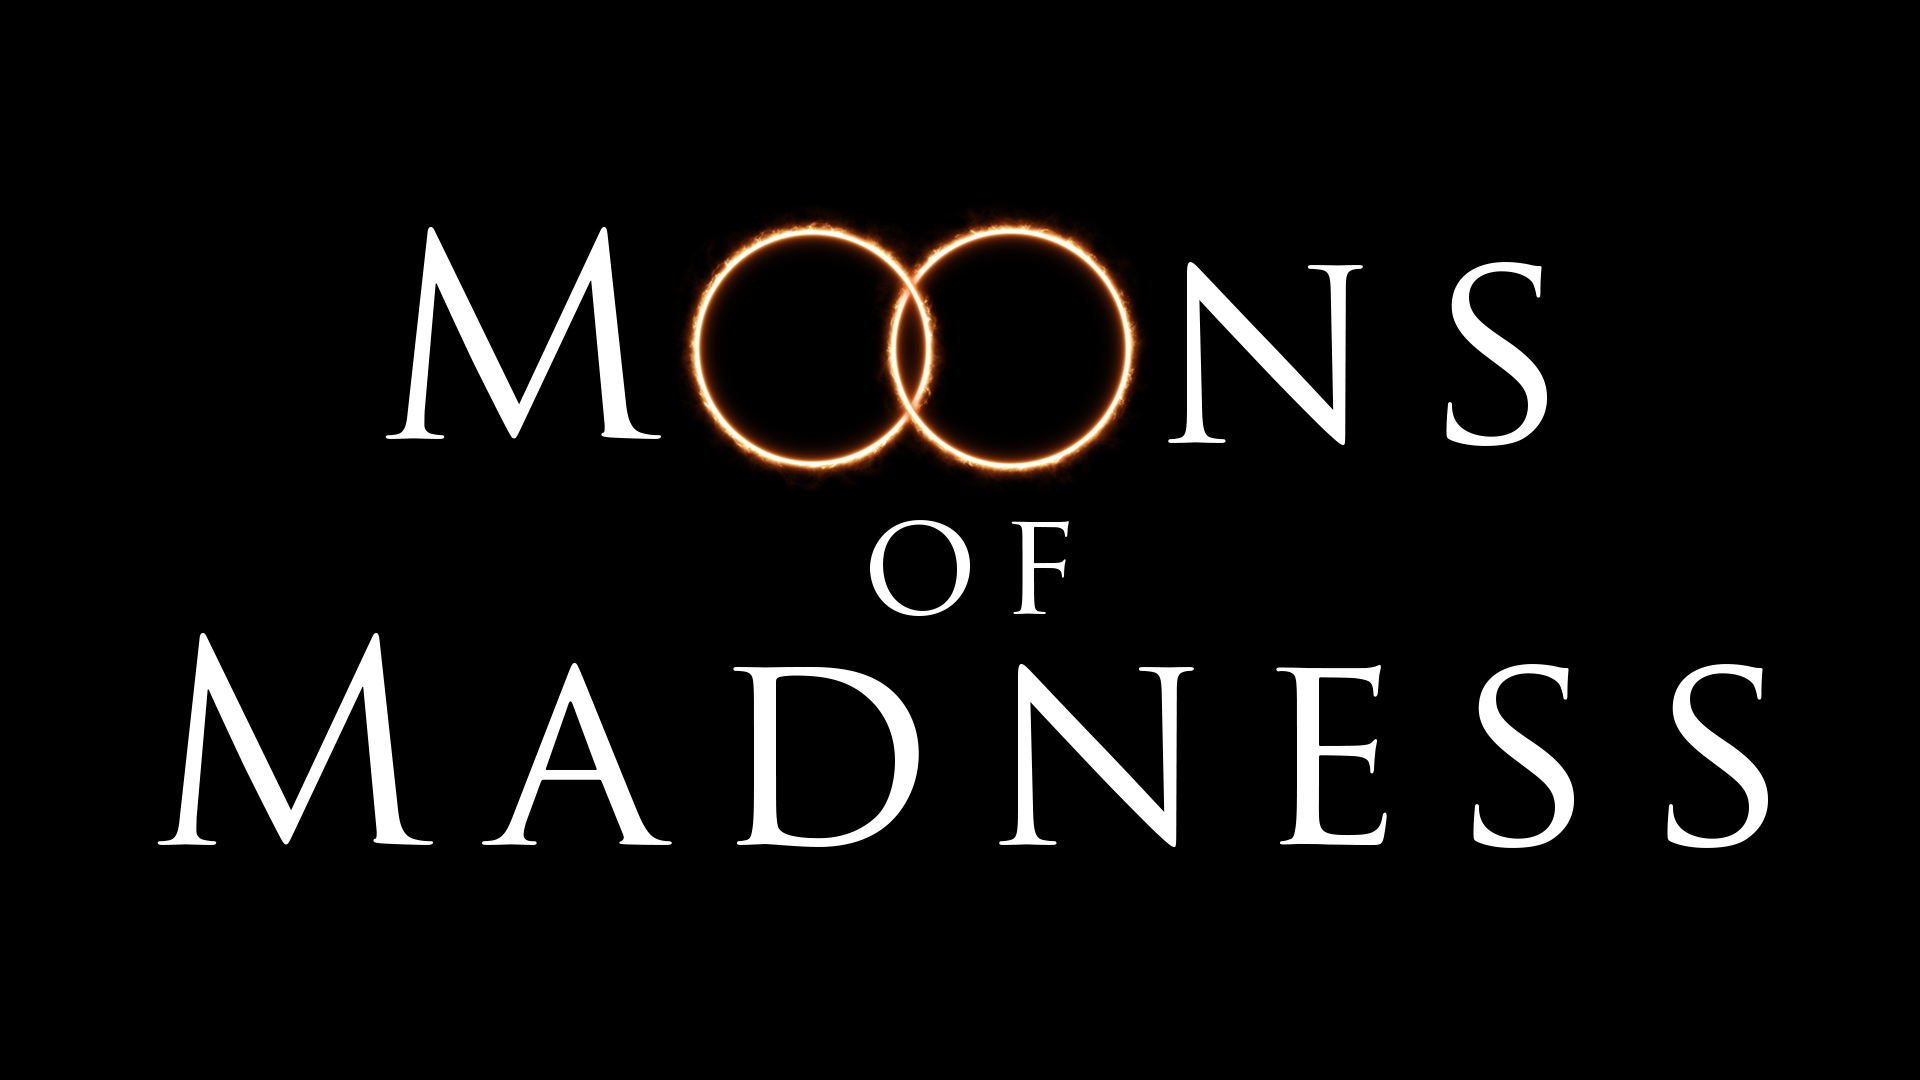 Moon madness steam фото 32